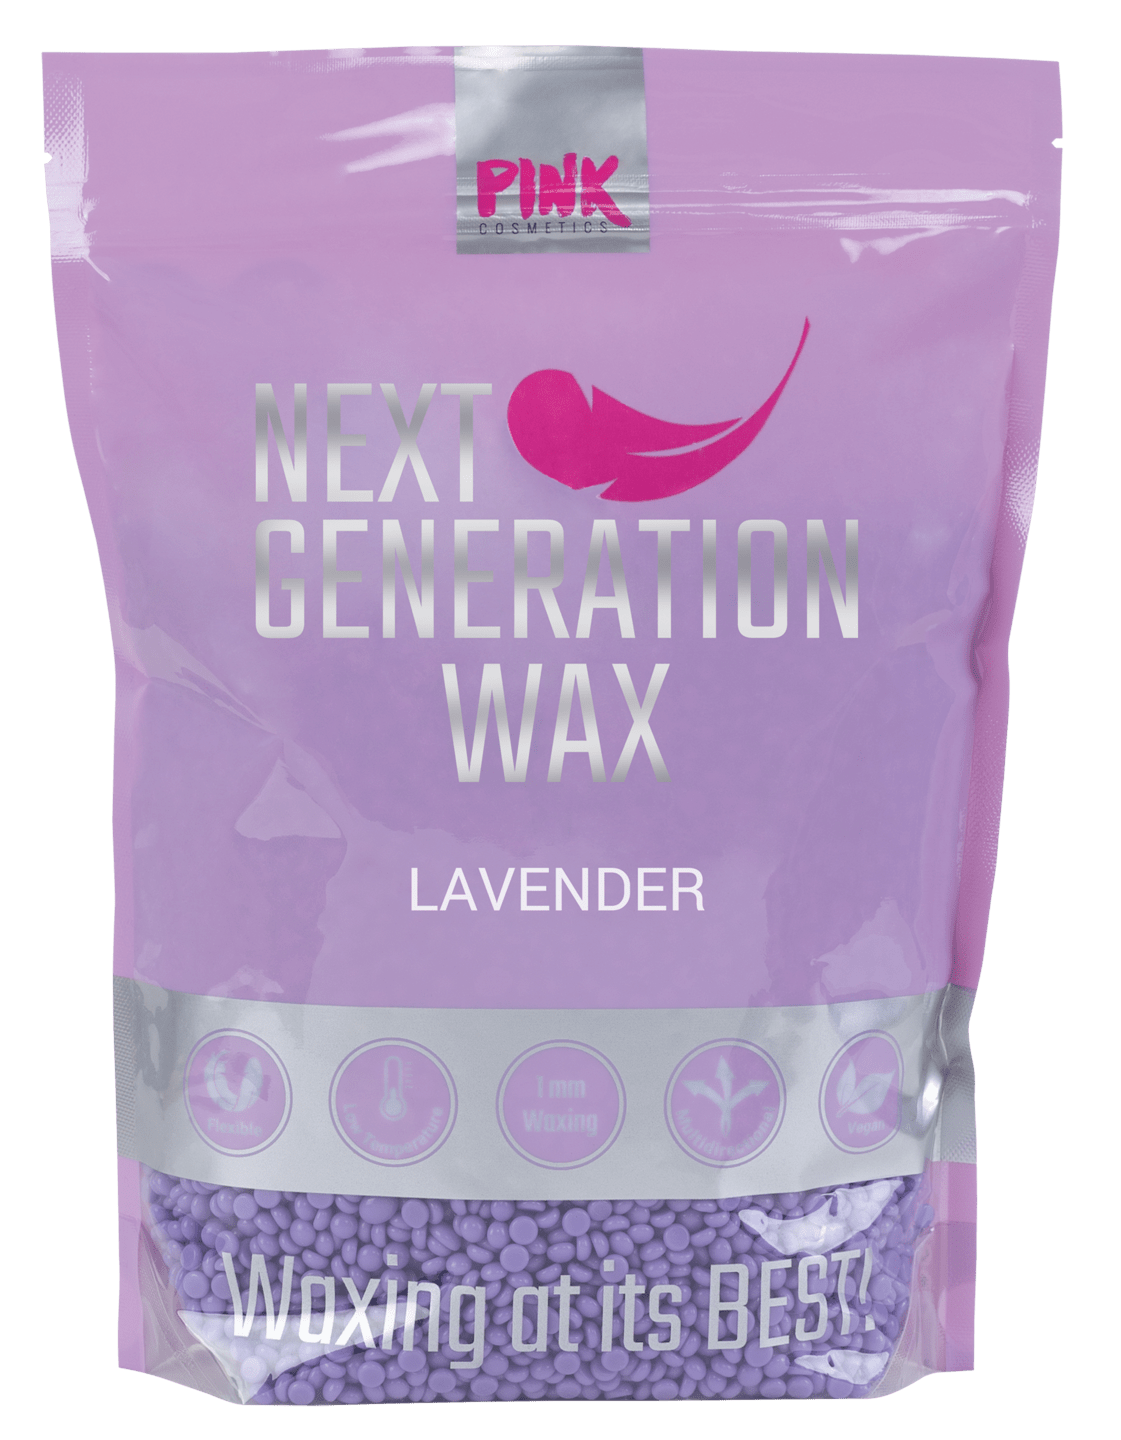 PINK Cosmetics - Next Generation Wax, 800 g in violett